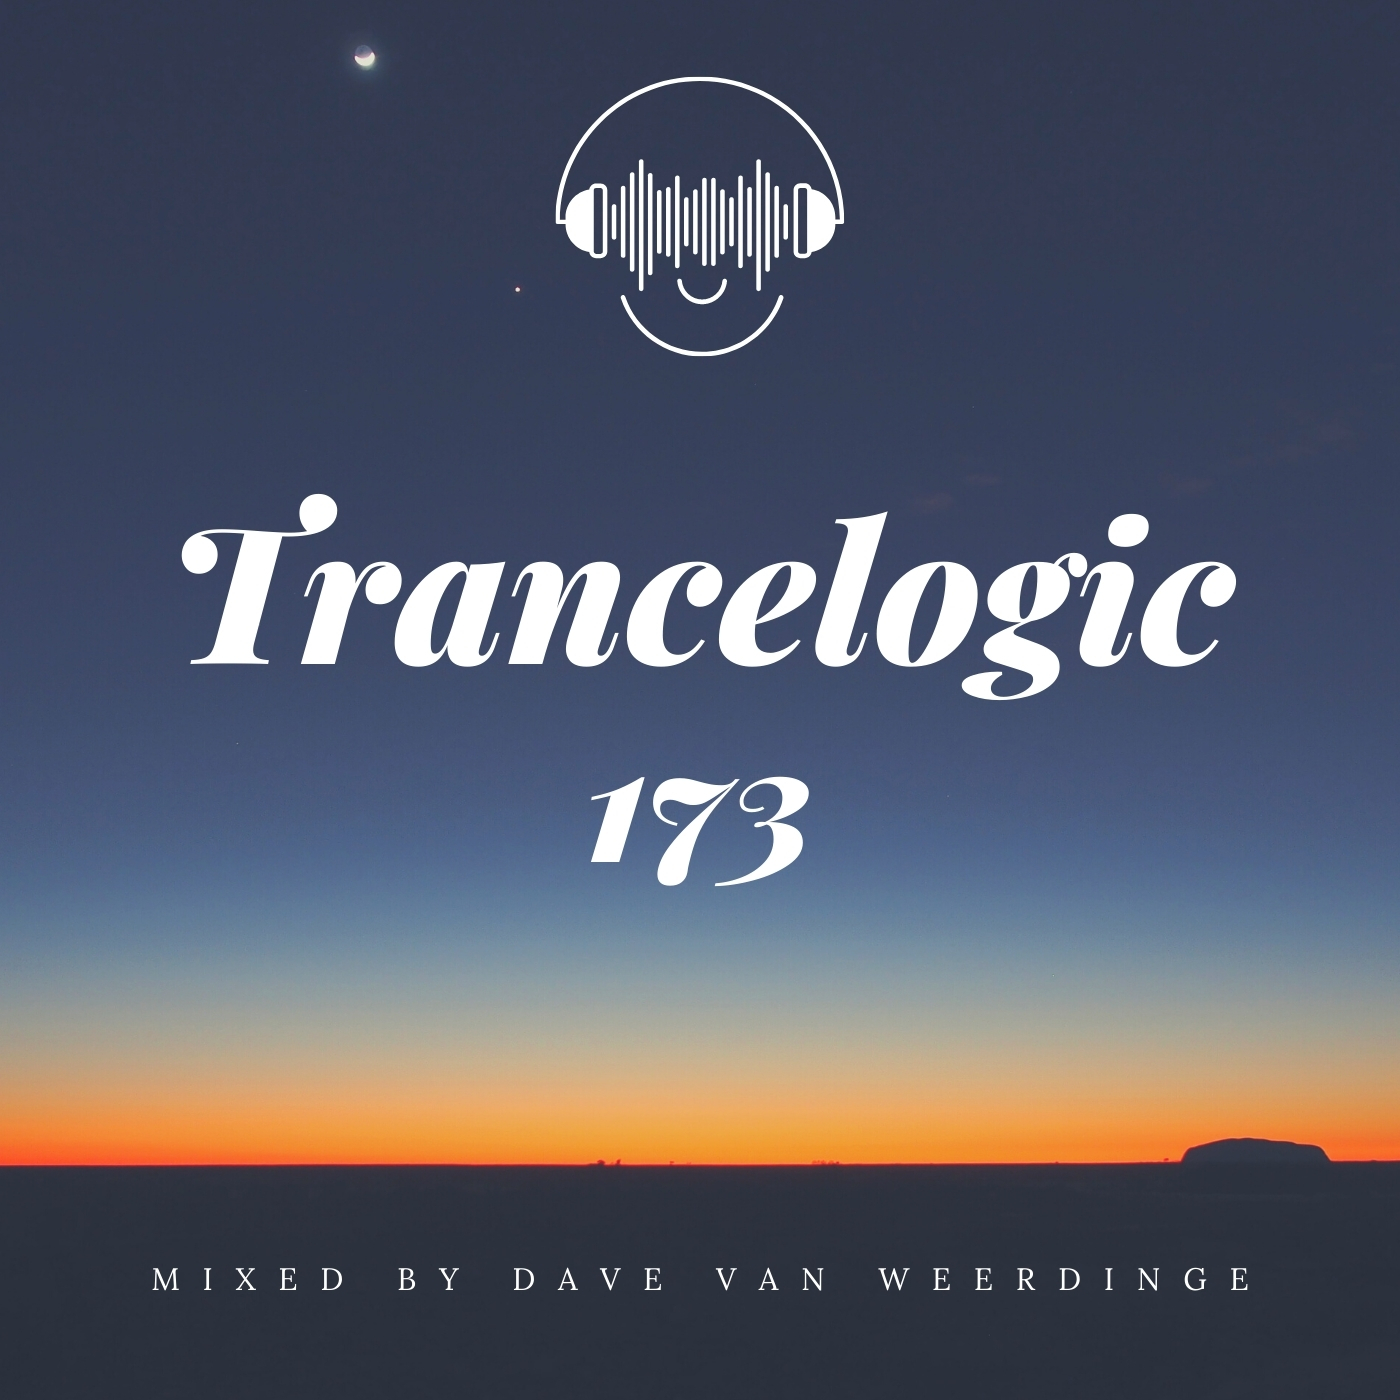 Trancelogic 173 by Dave van Weerdinge